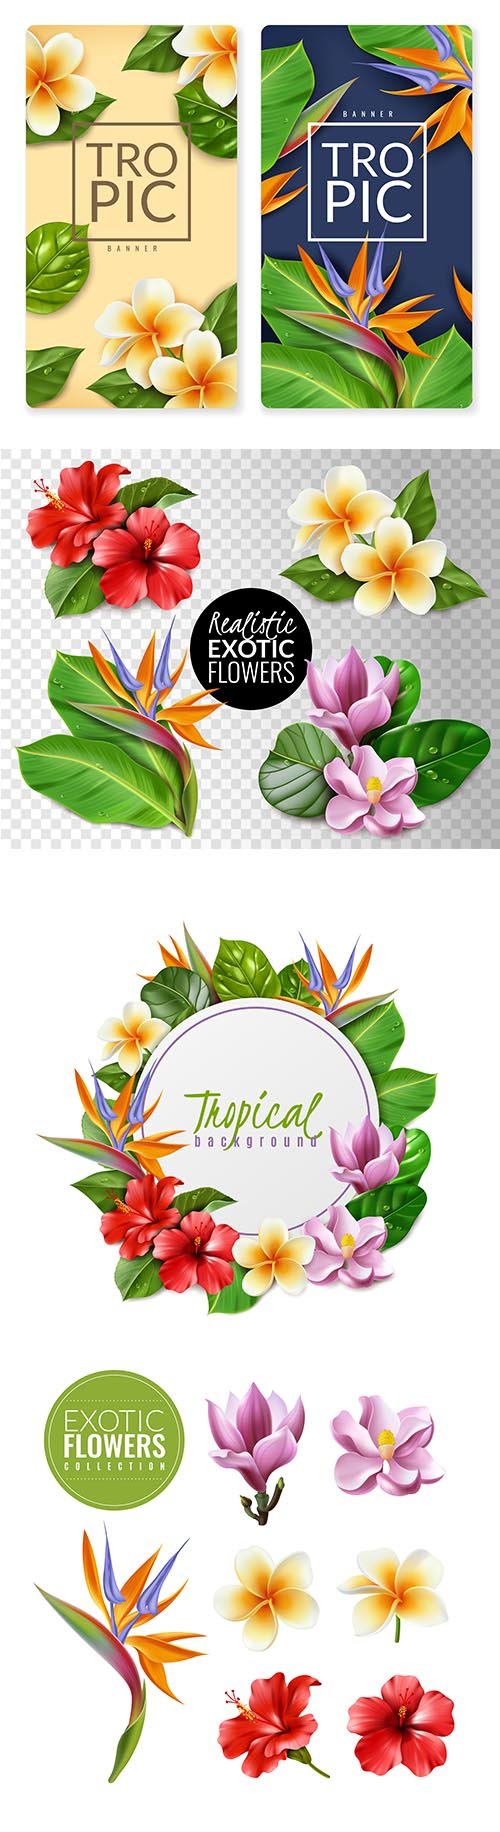 Realistic Exotic Flowers Illustration